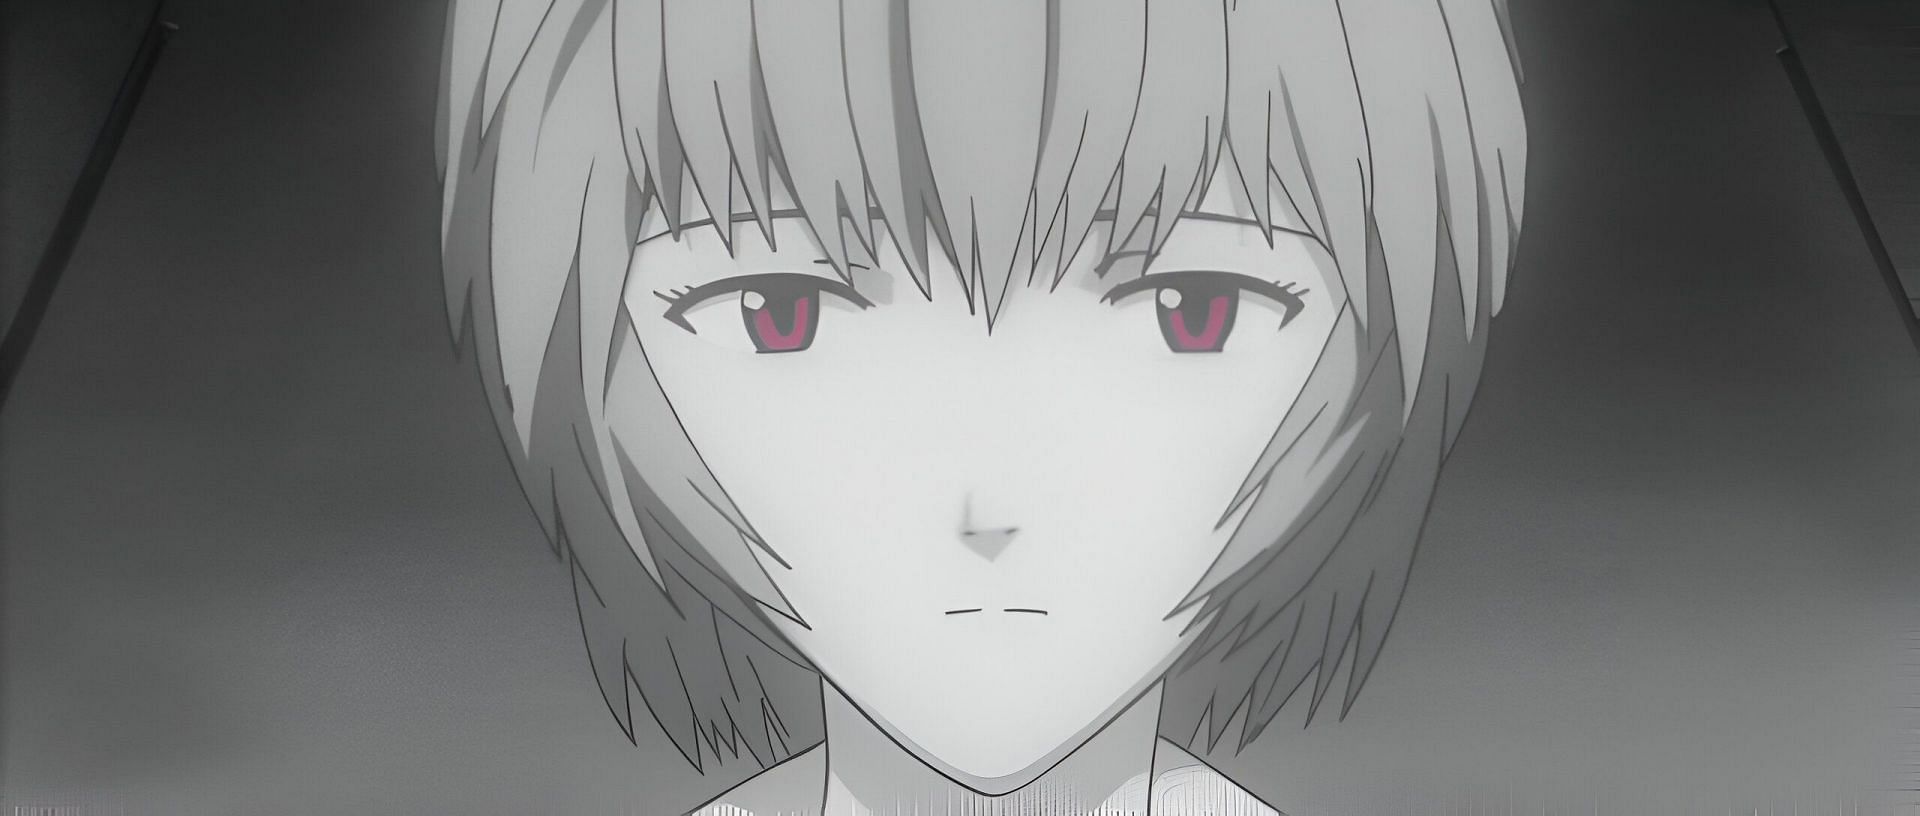 Rei Ayanami as seen in the anime (Image via Studio Gainax &amp; Tatsunoko Production)